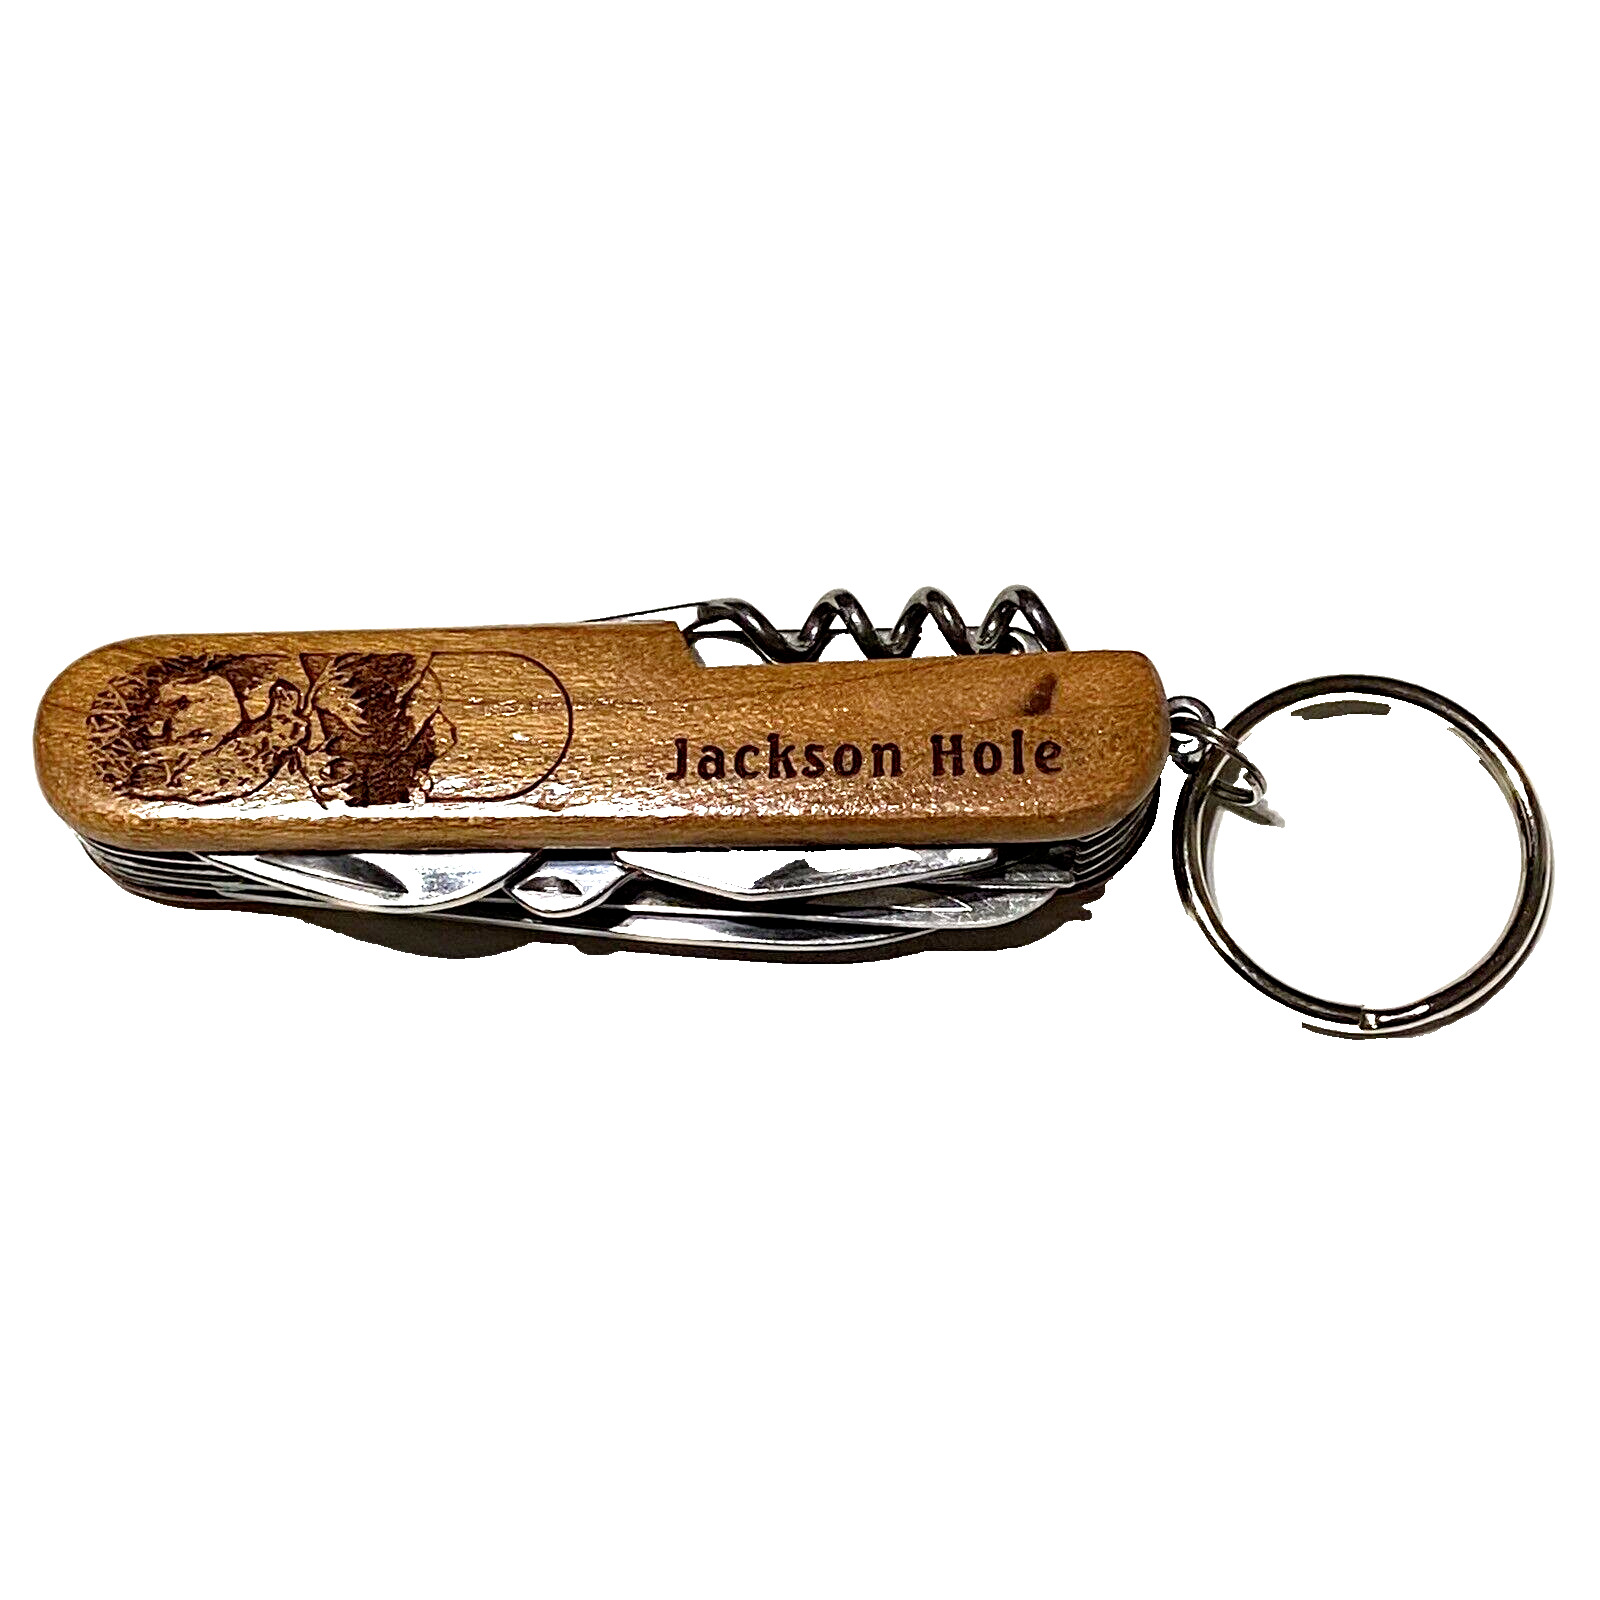 NEW Jackson Hole Wood Grain Multi-Tool Pocket Knife Keychain, MOOSE Engraving